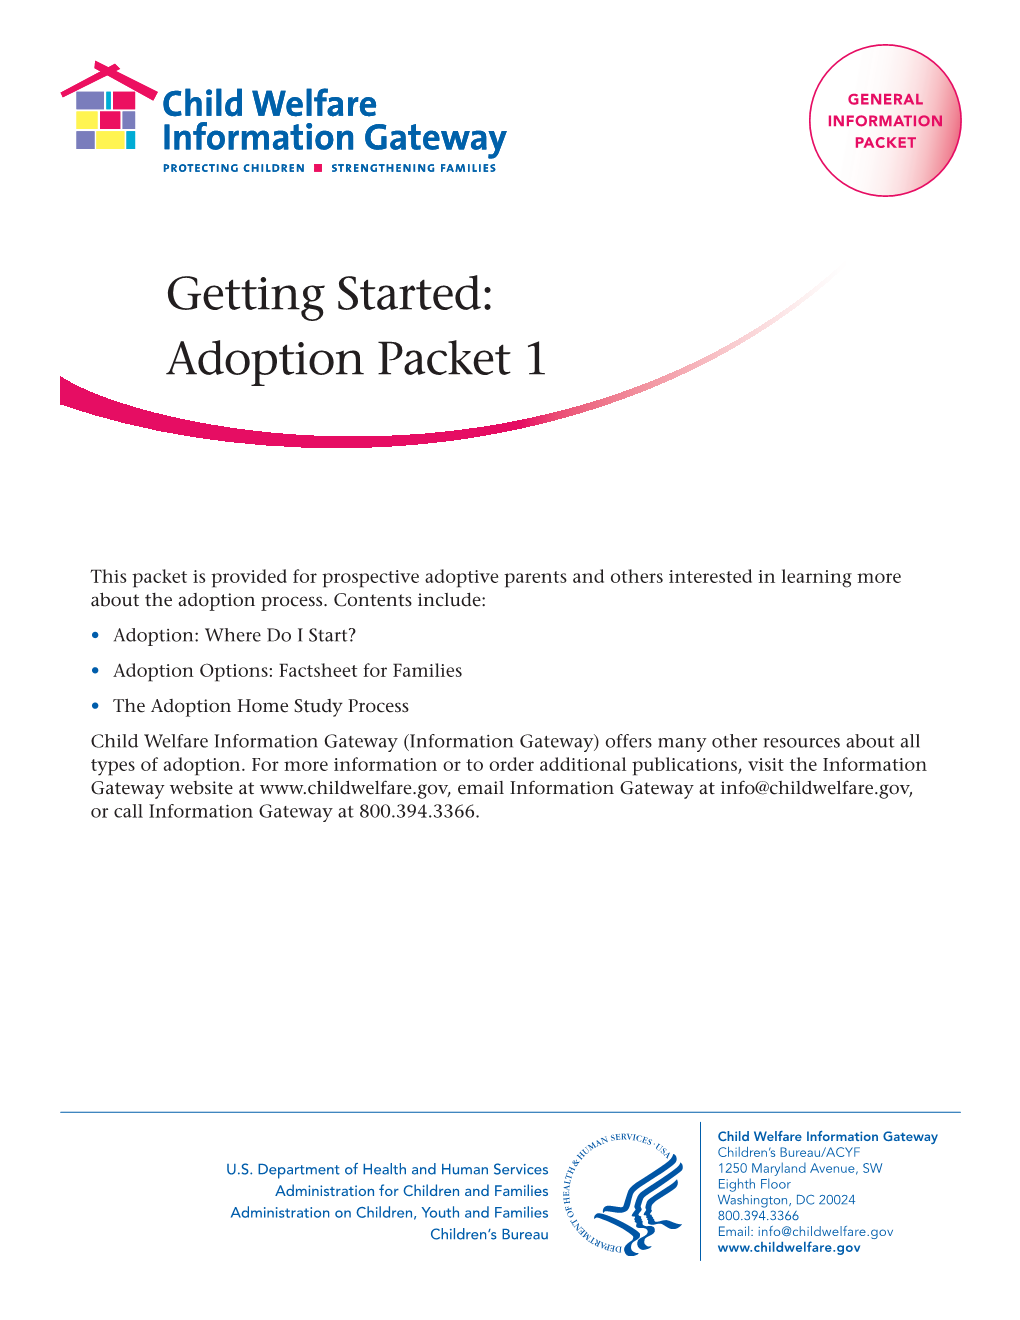 Adoption Packet 1